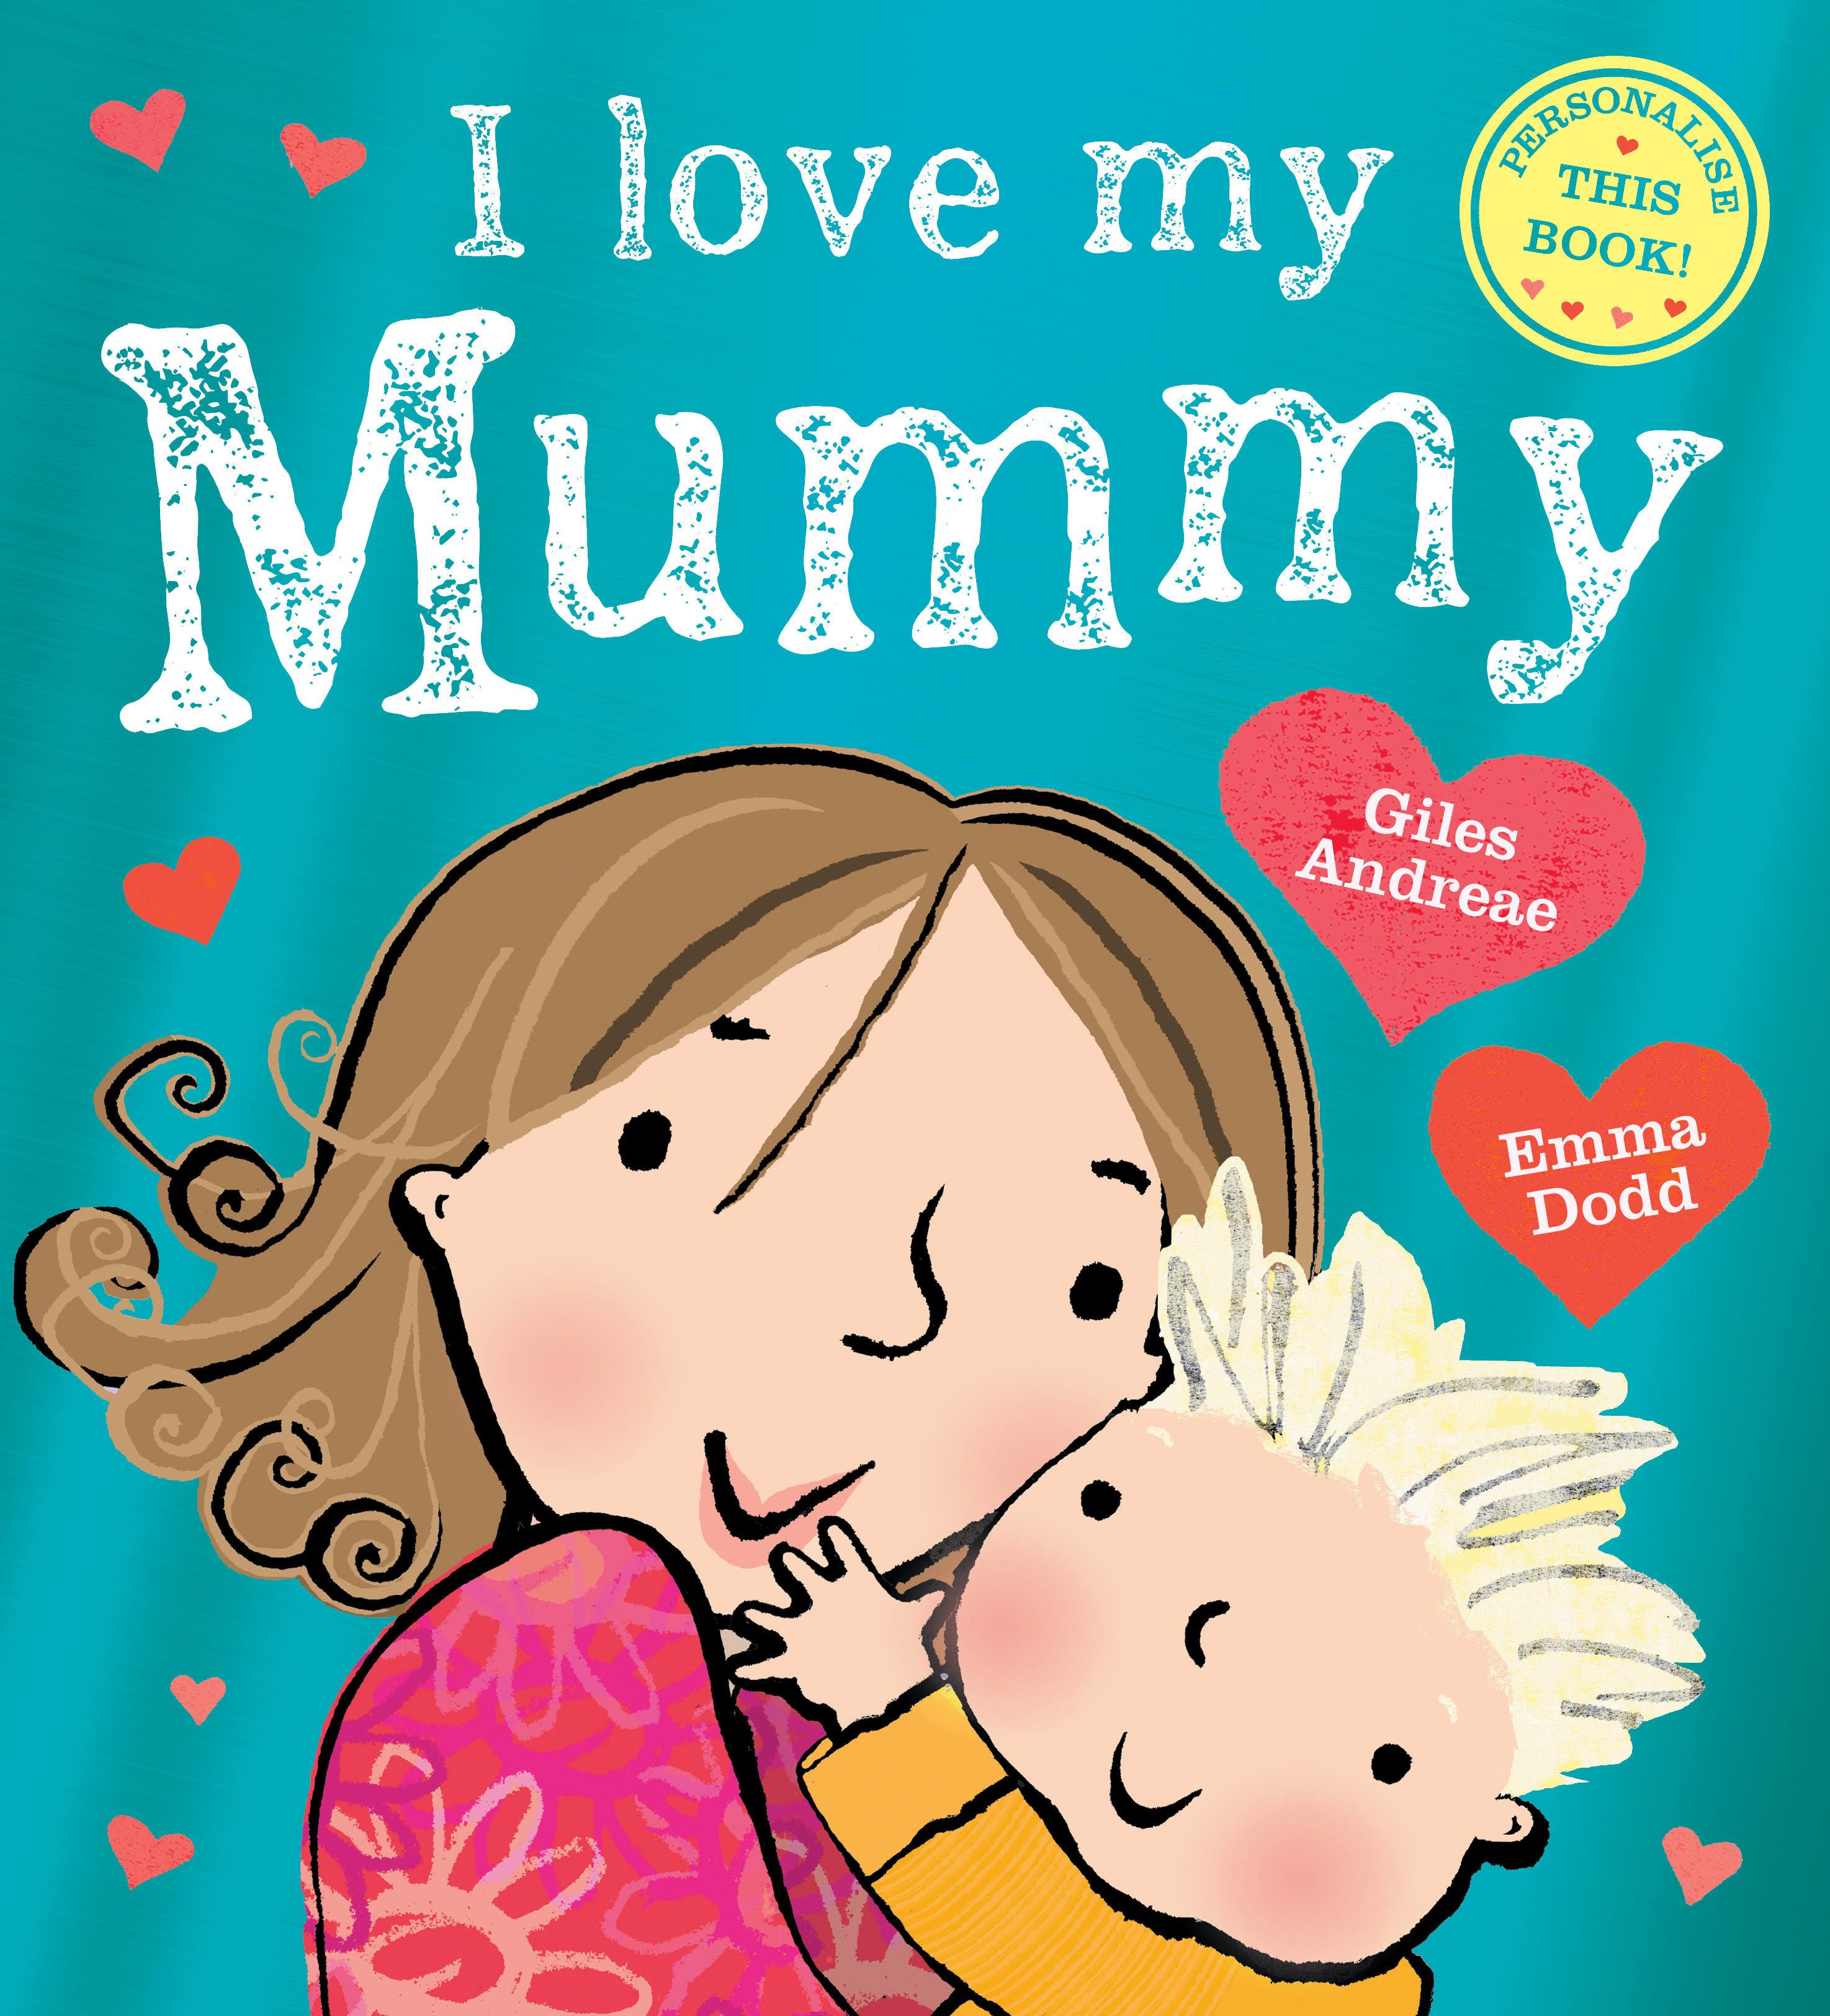 i-love-my-mummy-gilesandrea-emmadodd-bananabearbooks-banana-bear-books-and-illustration